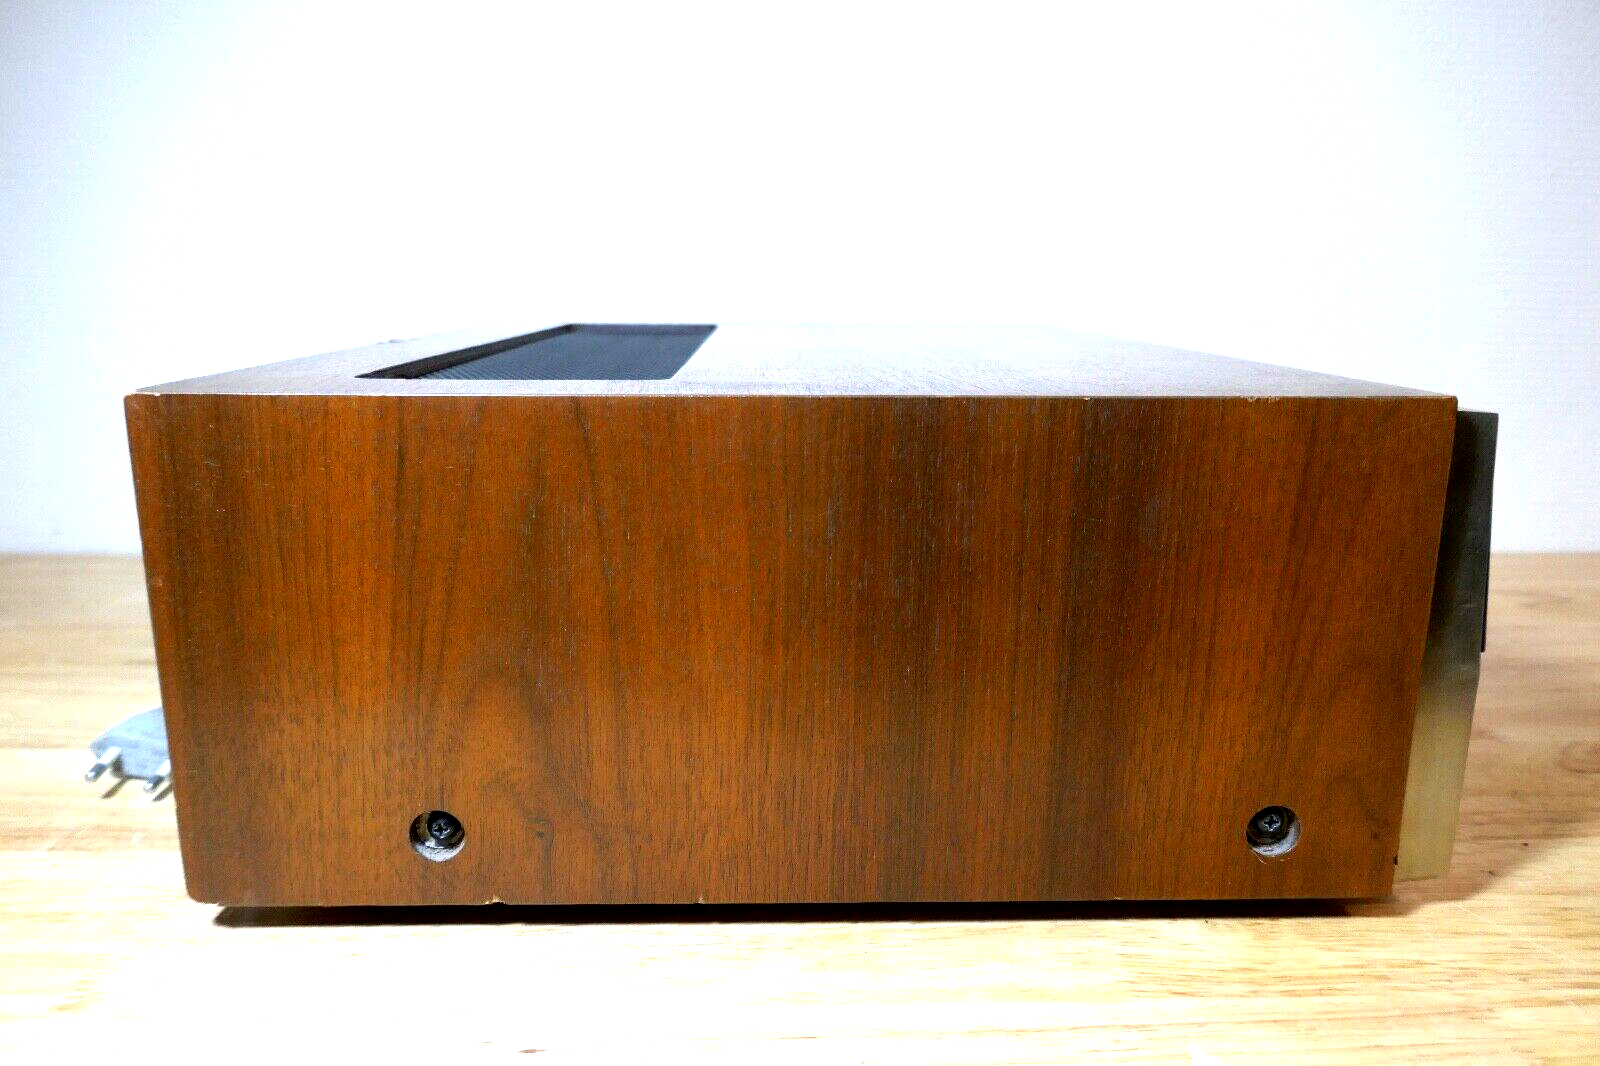 amplifier amplificateur kenwood kr-4200 vintage occasion